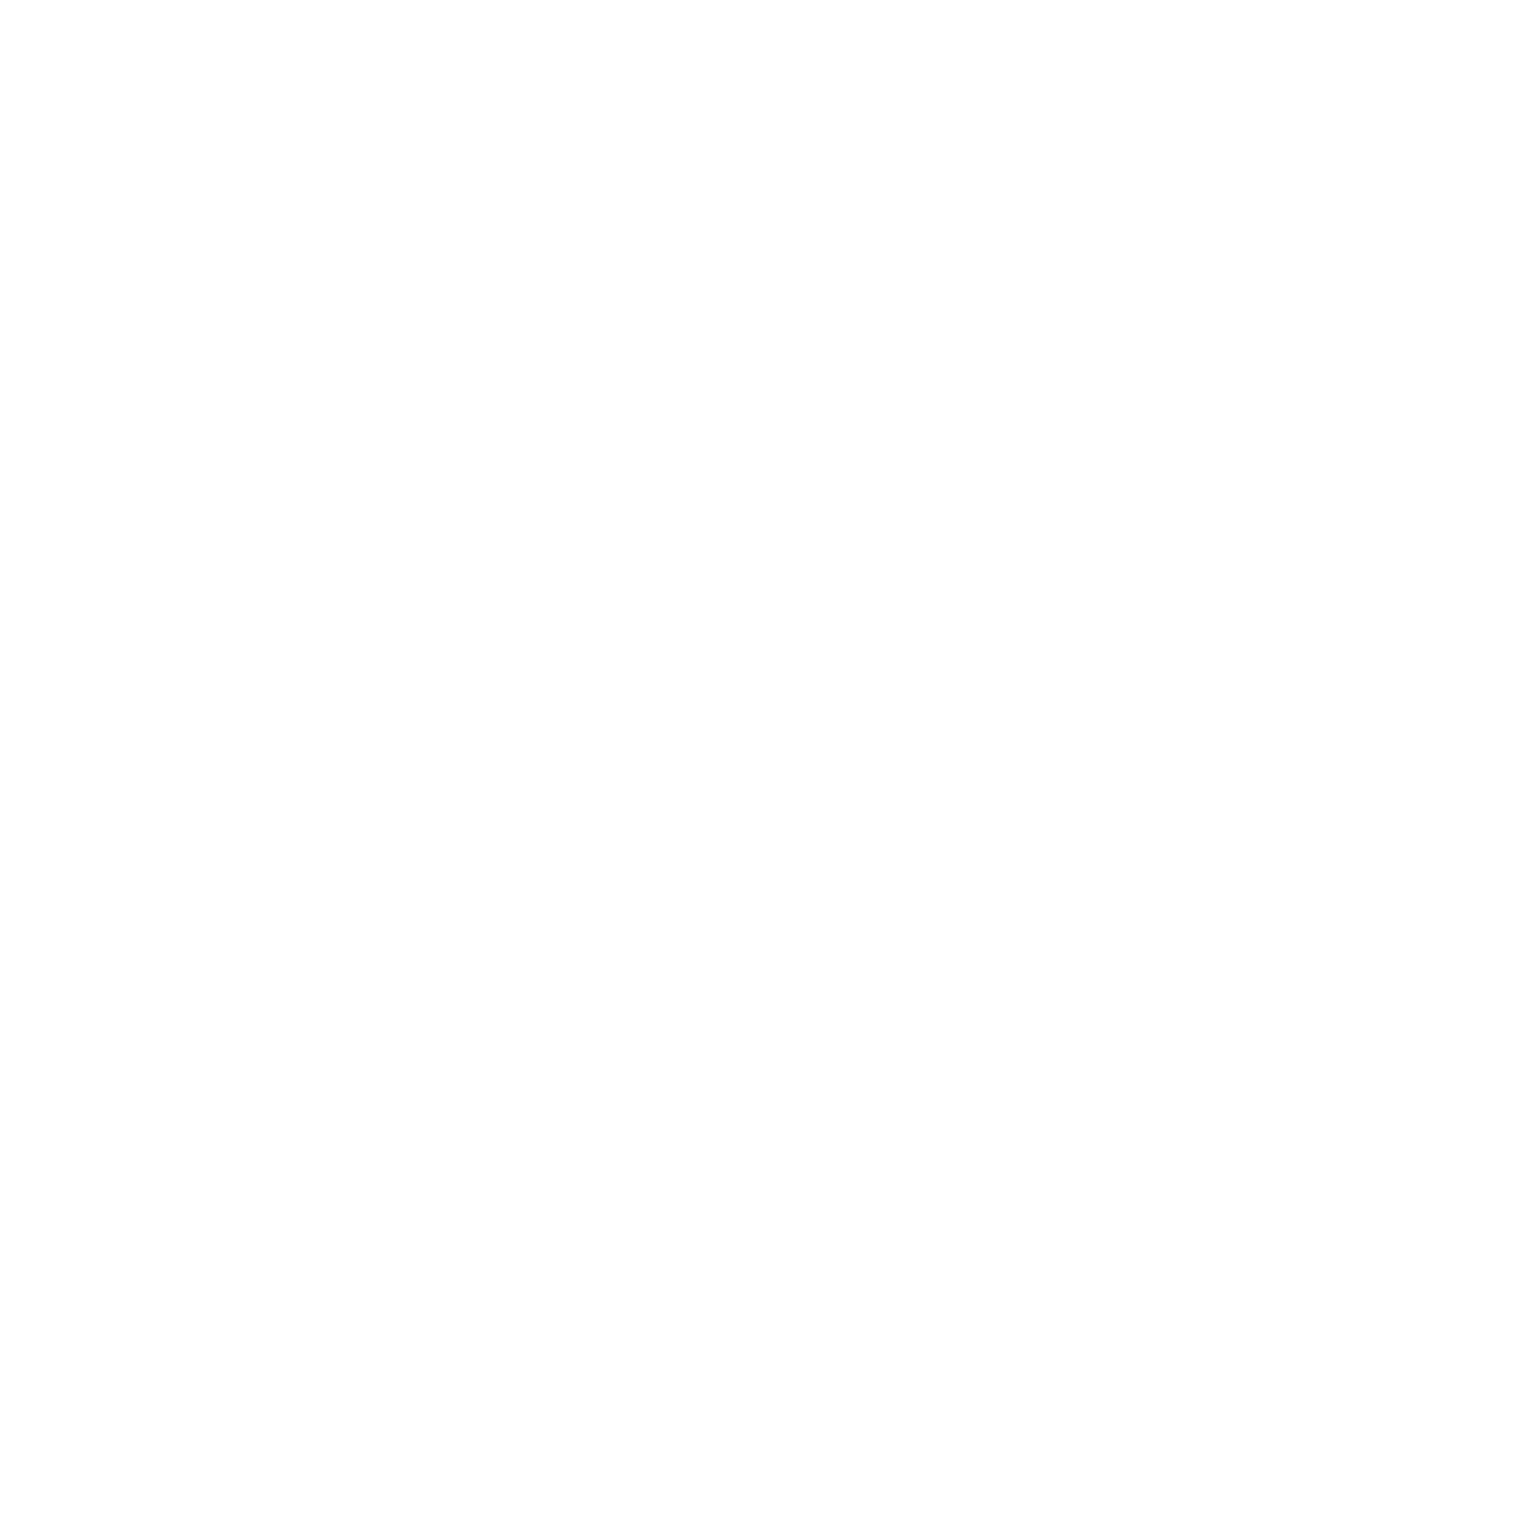 UiPath logo for dark backgrounds (transparent PNG)